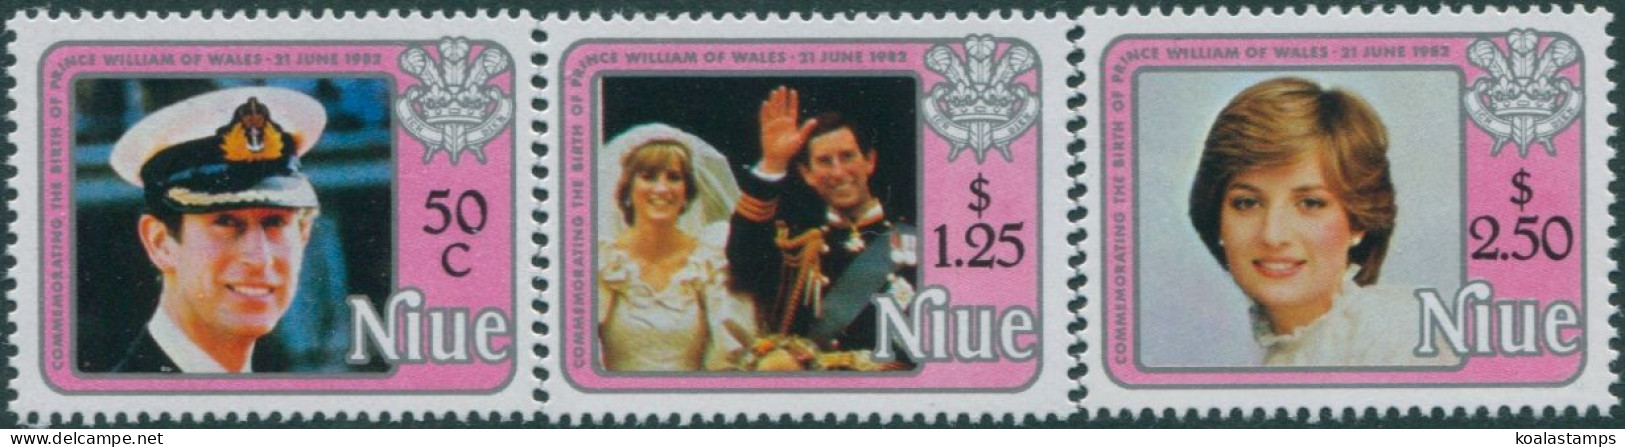 Niue 1982 SG465-467 Royal Birth Prince William Set MNH - Niue